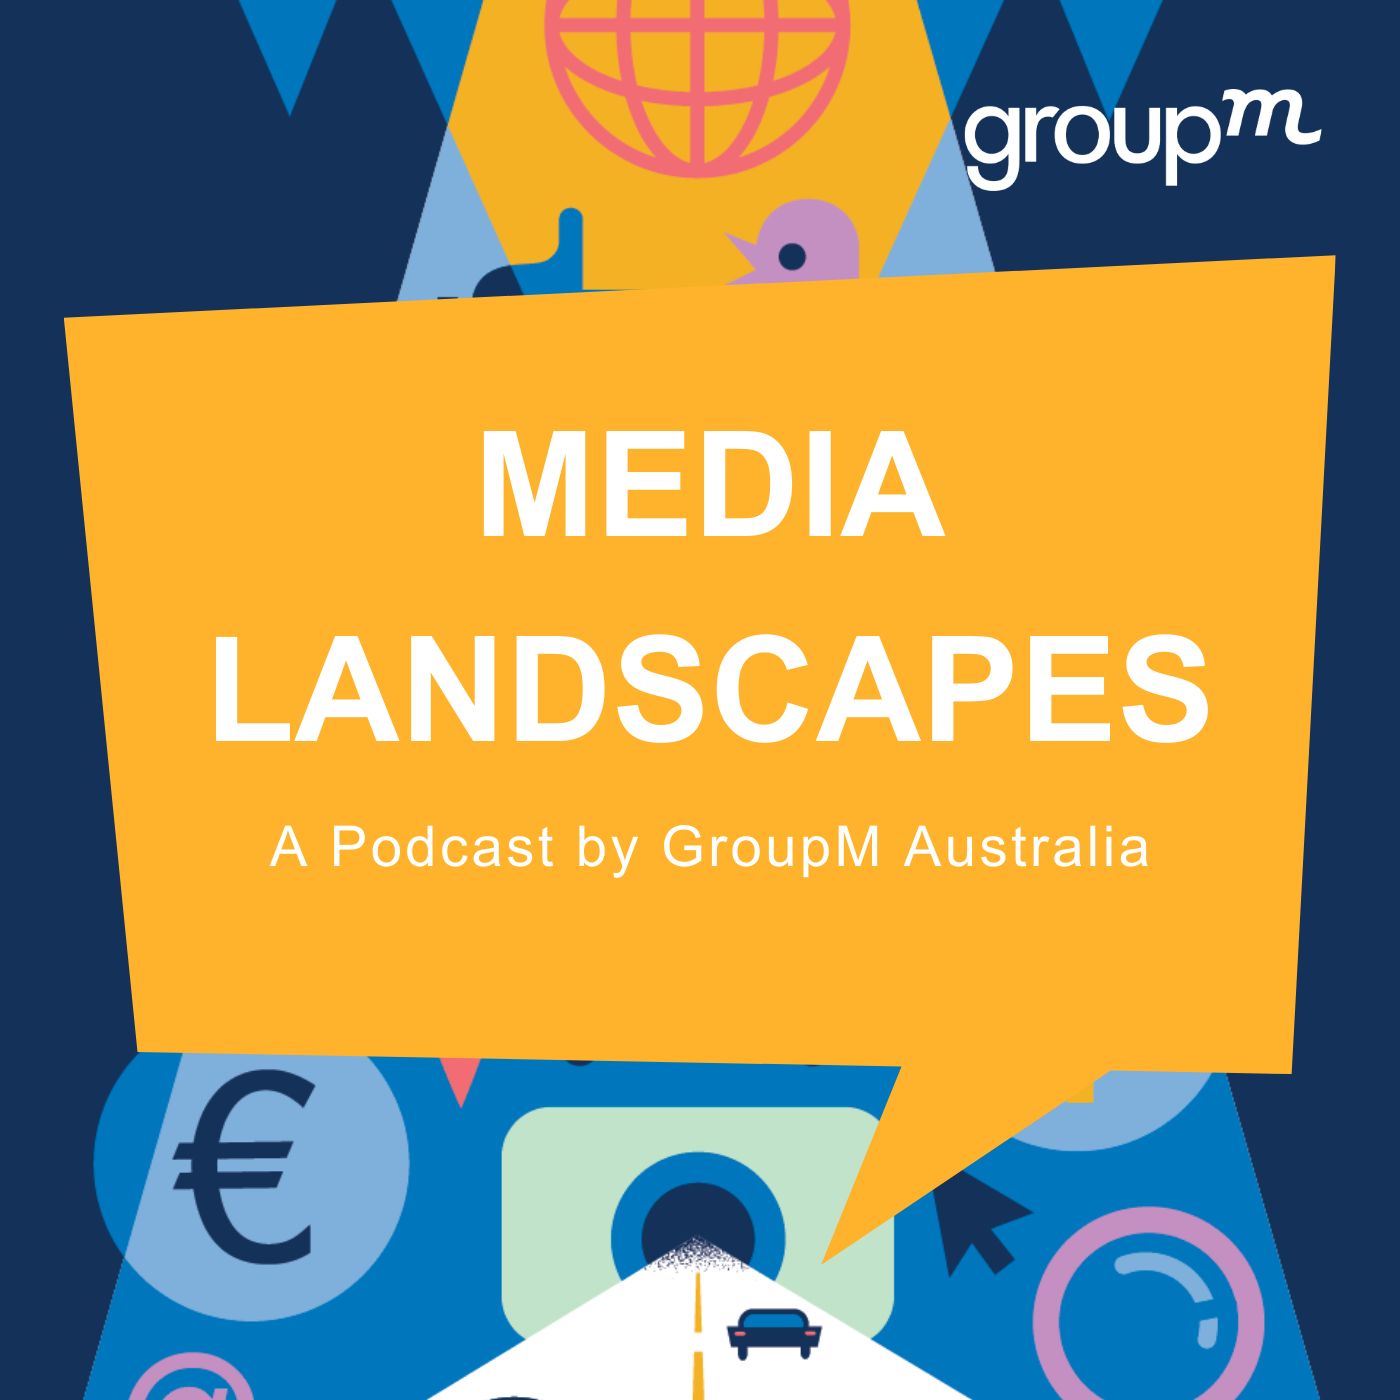 Media Landscapes The Podcast